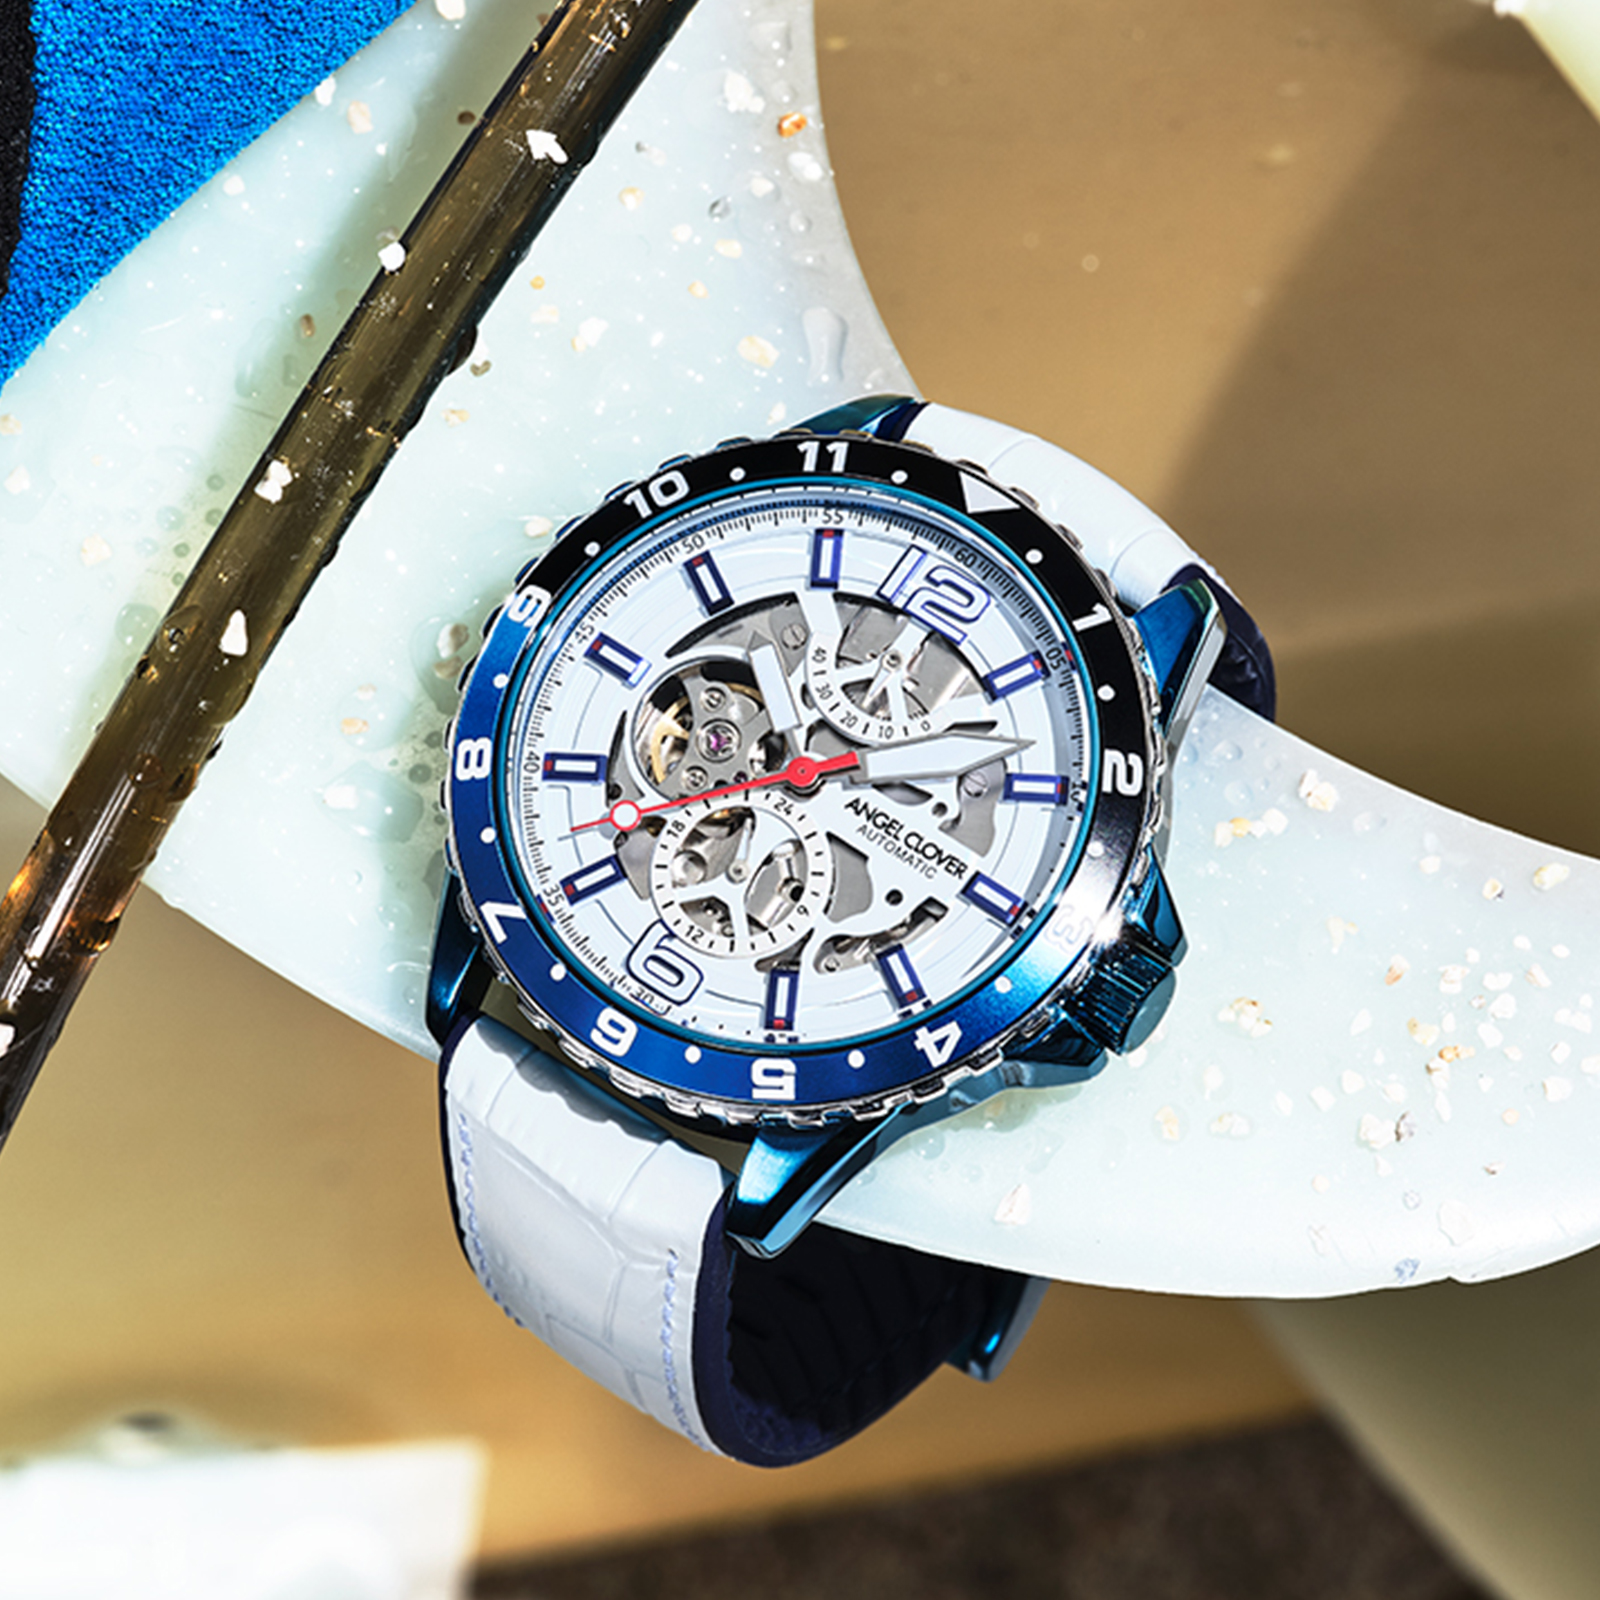 HONHX 腕時計 3気圧防水 デジタル腕時計 ダイバーズウォッチ - 時計